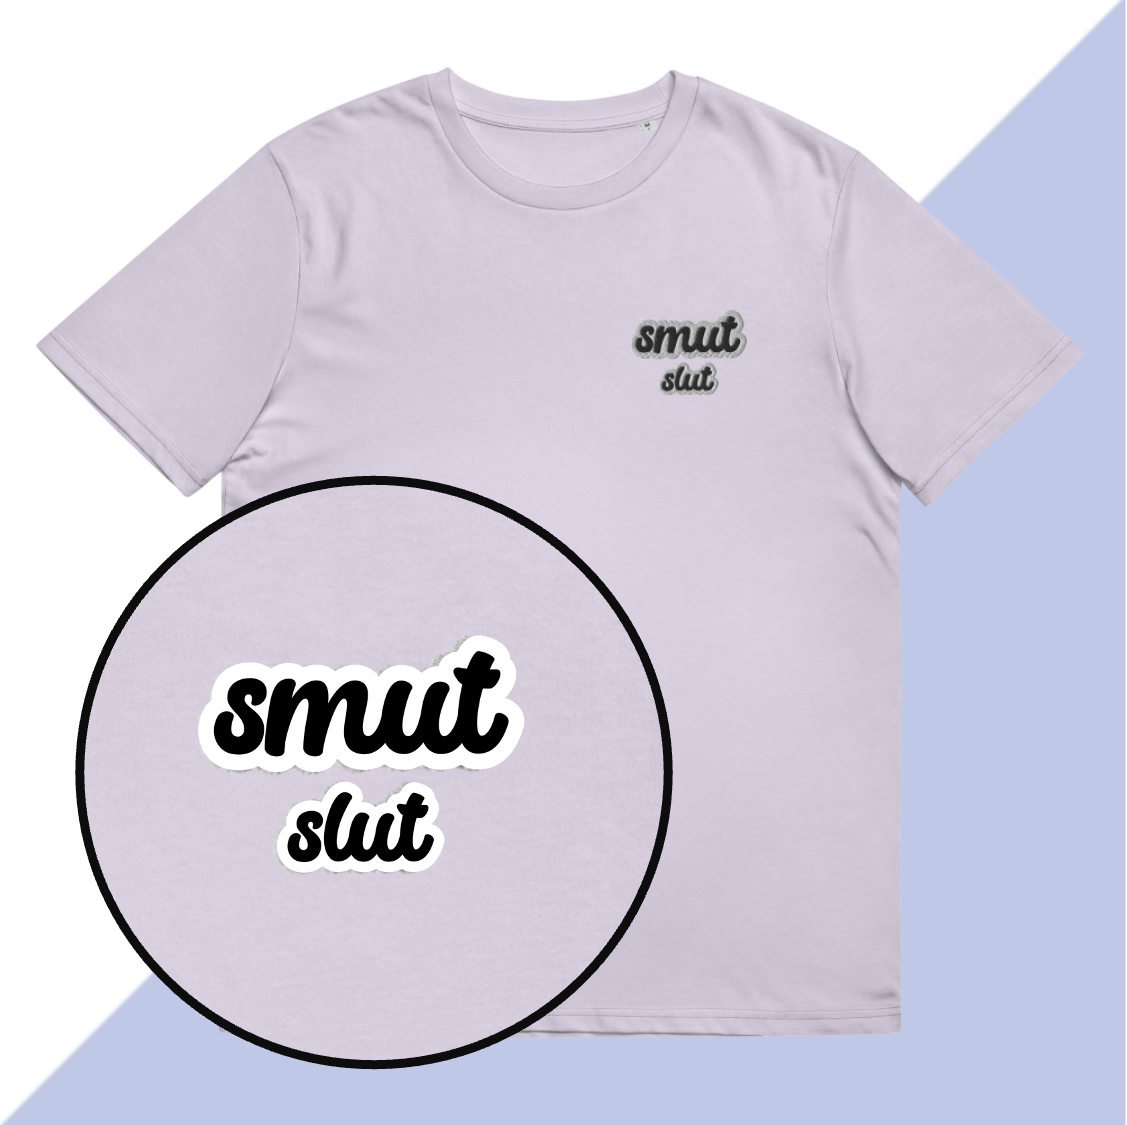 SMUT SLUT - Embroidered Unisex T-Shirt